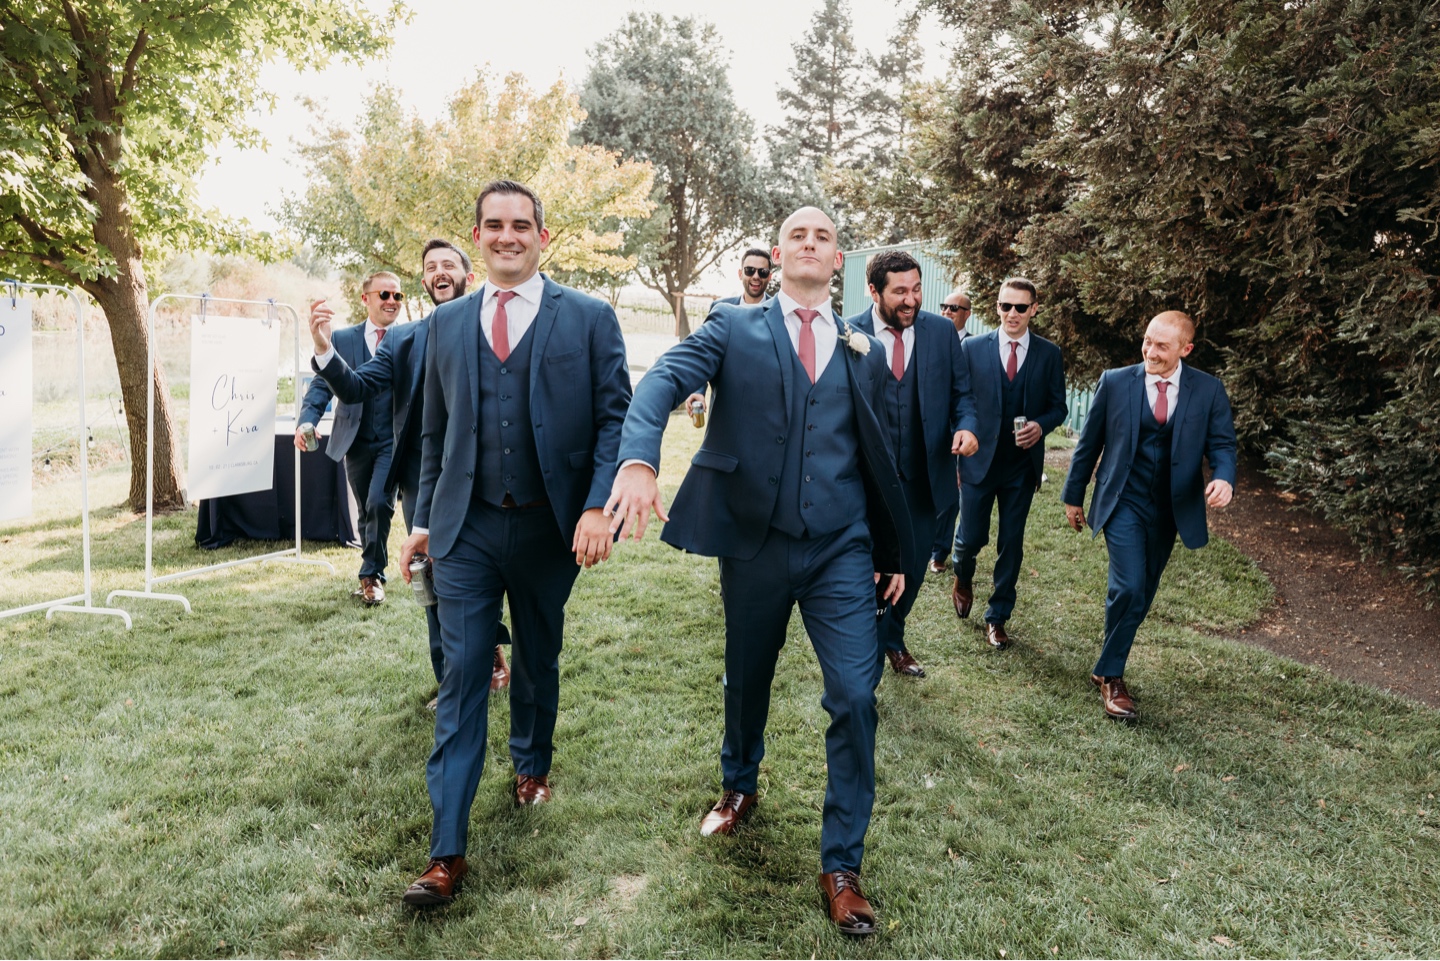 Groom walks with his groomsmen through a field towards his wedding. Wedding photography in Sacramento by Liz Koston.